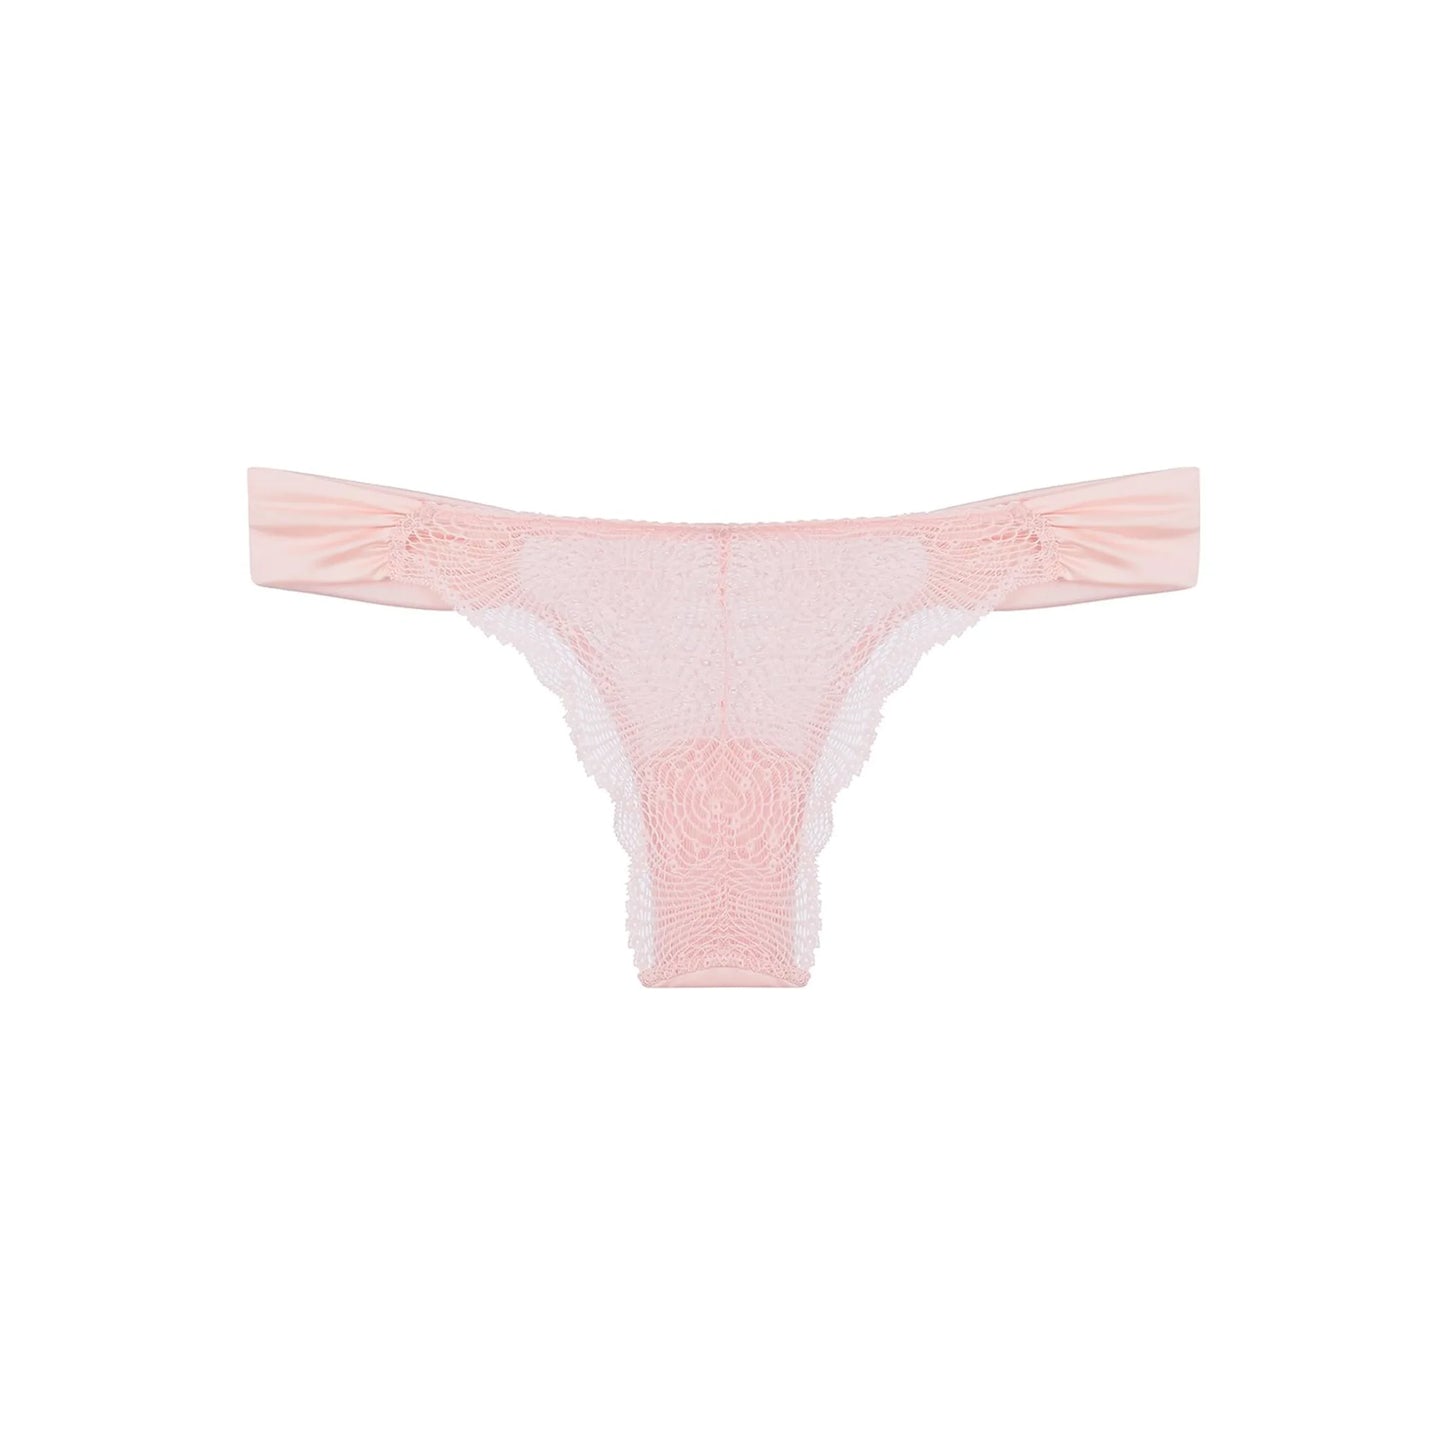 Sassy Pant in Lotus Pink | LoveRose Lingerie